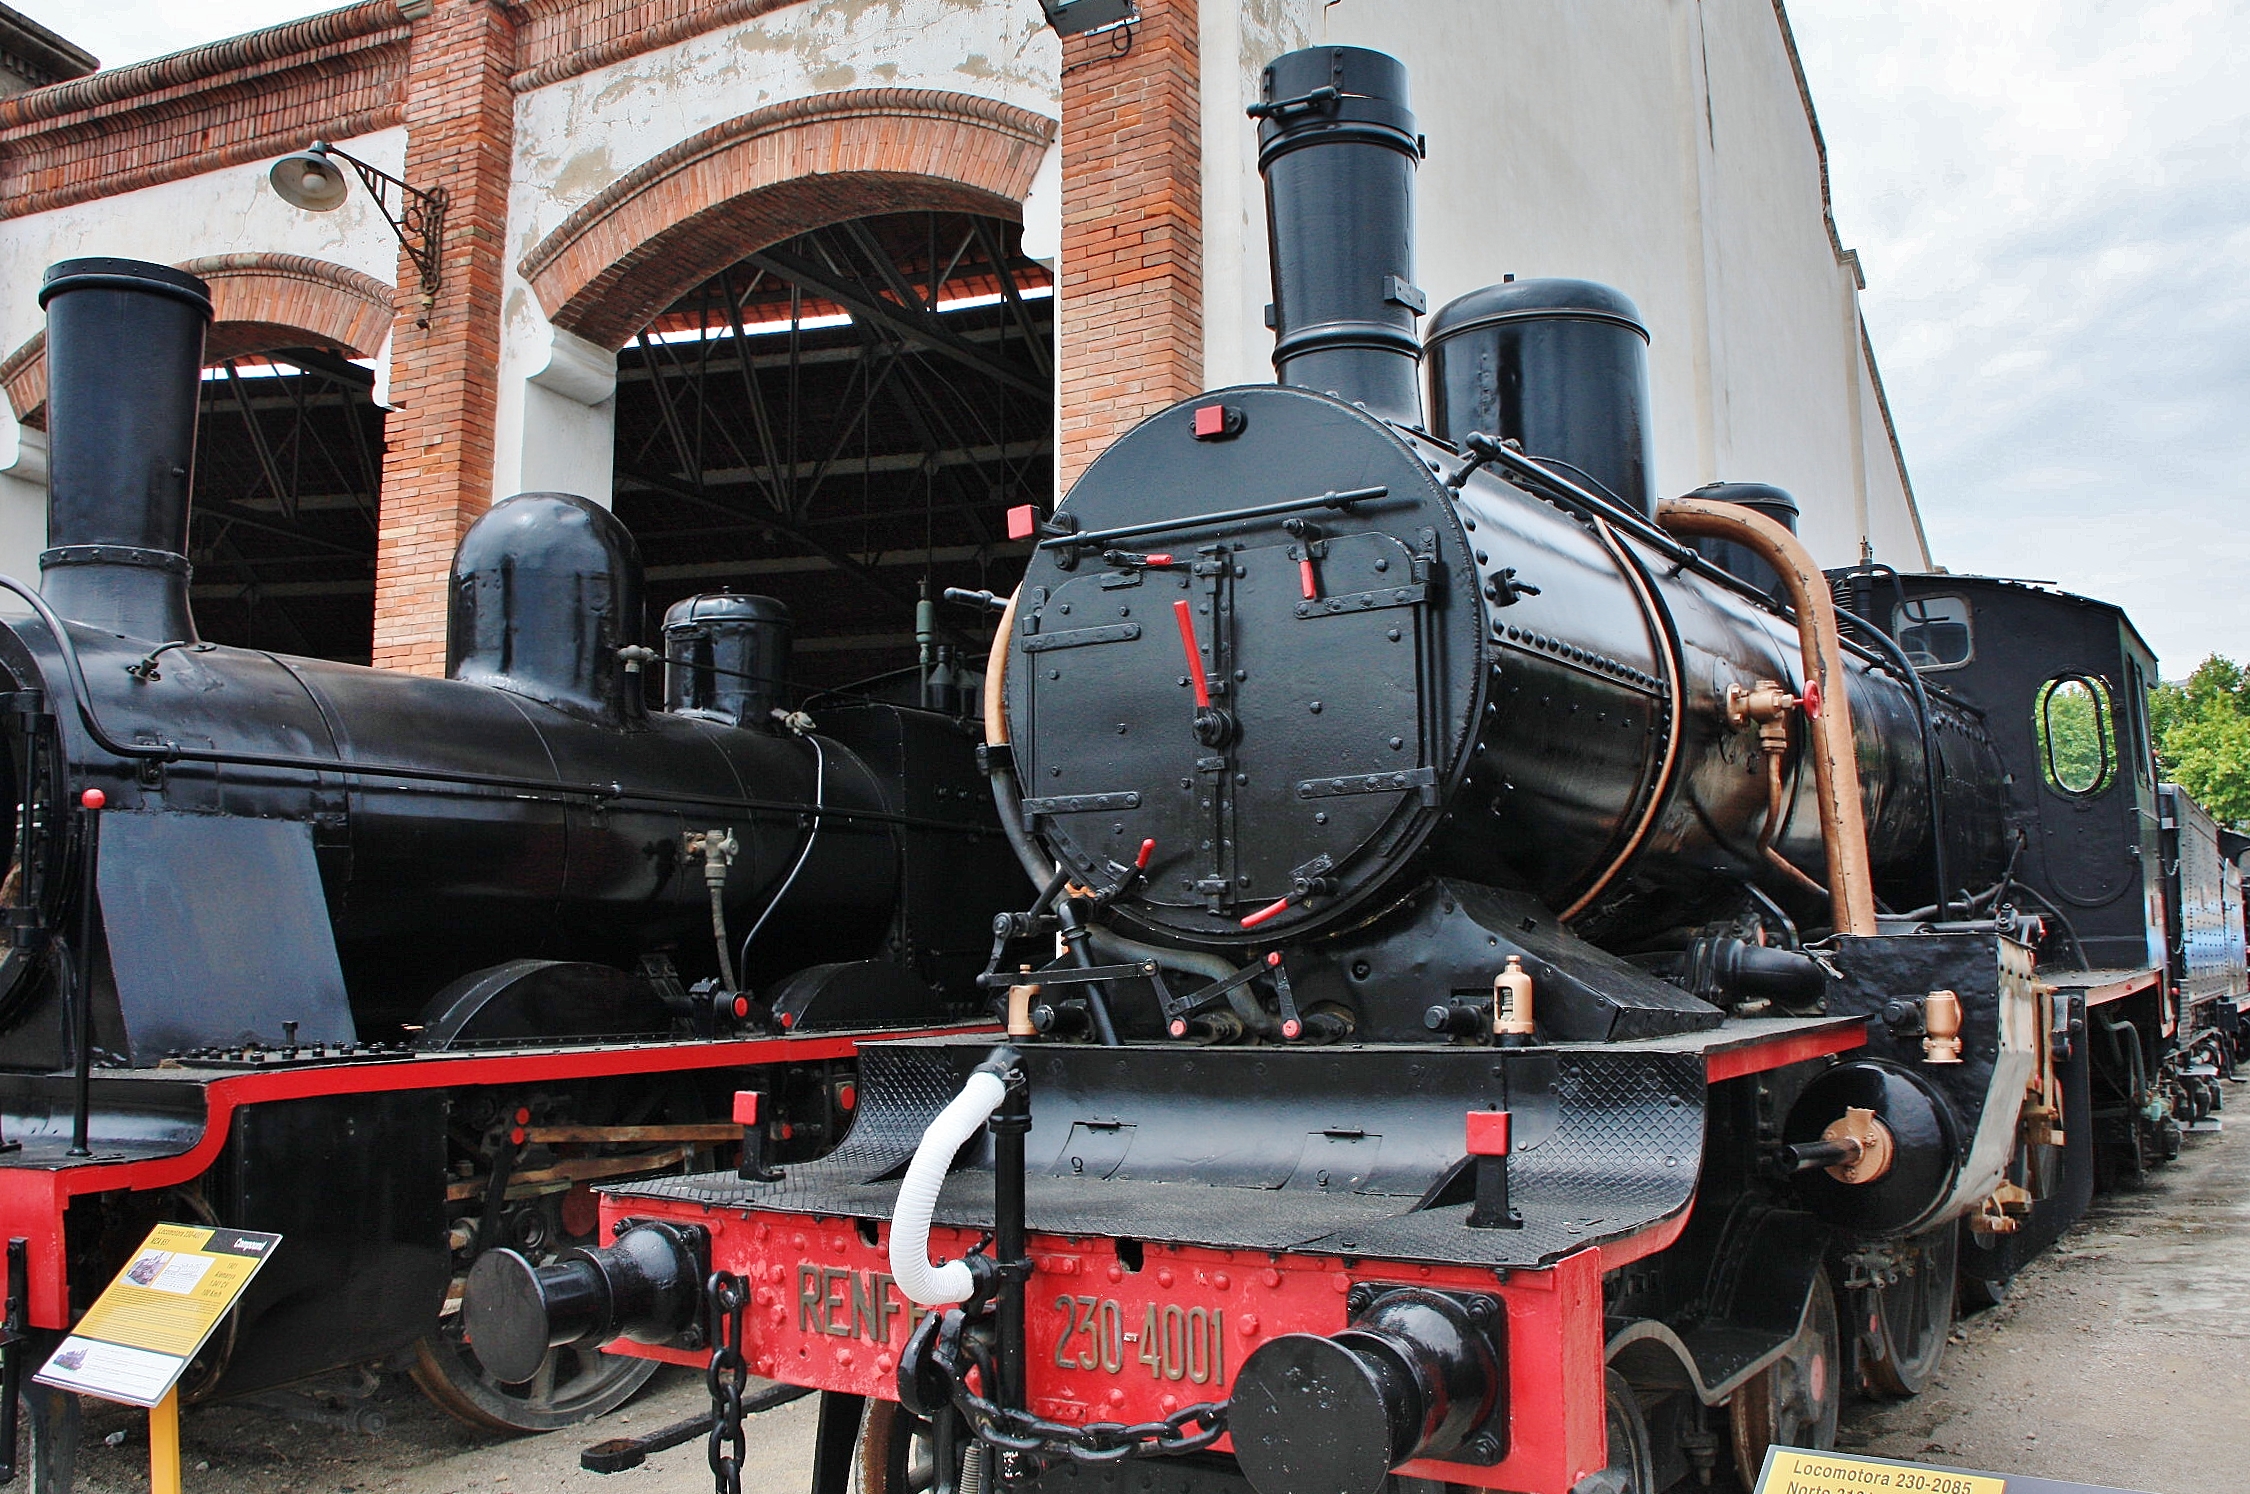 Foto: Museo del Ferrocarril - Vilanova i la Geltrú (Barcelona), España